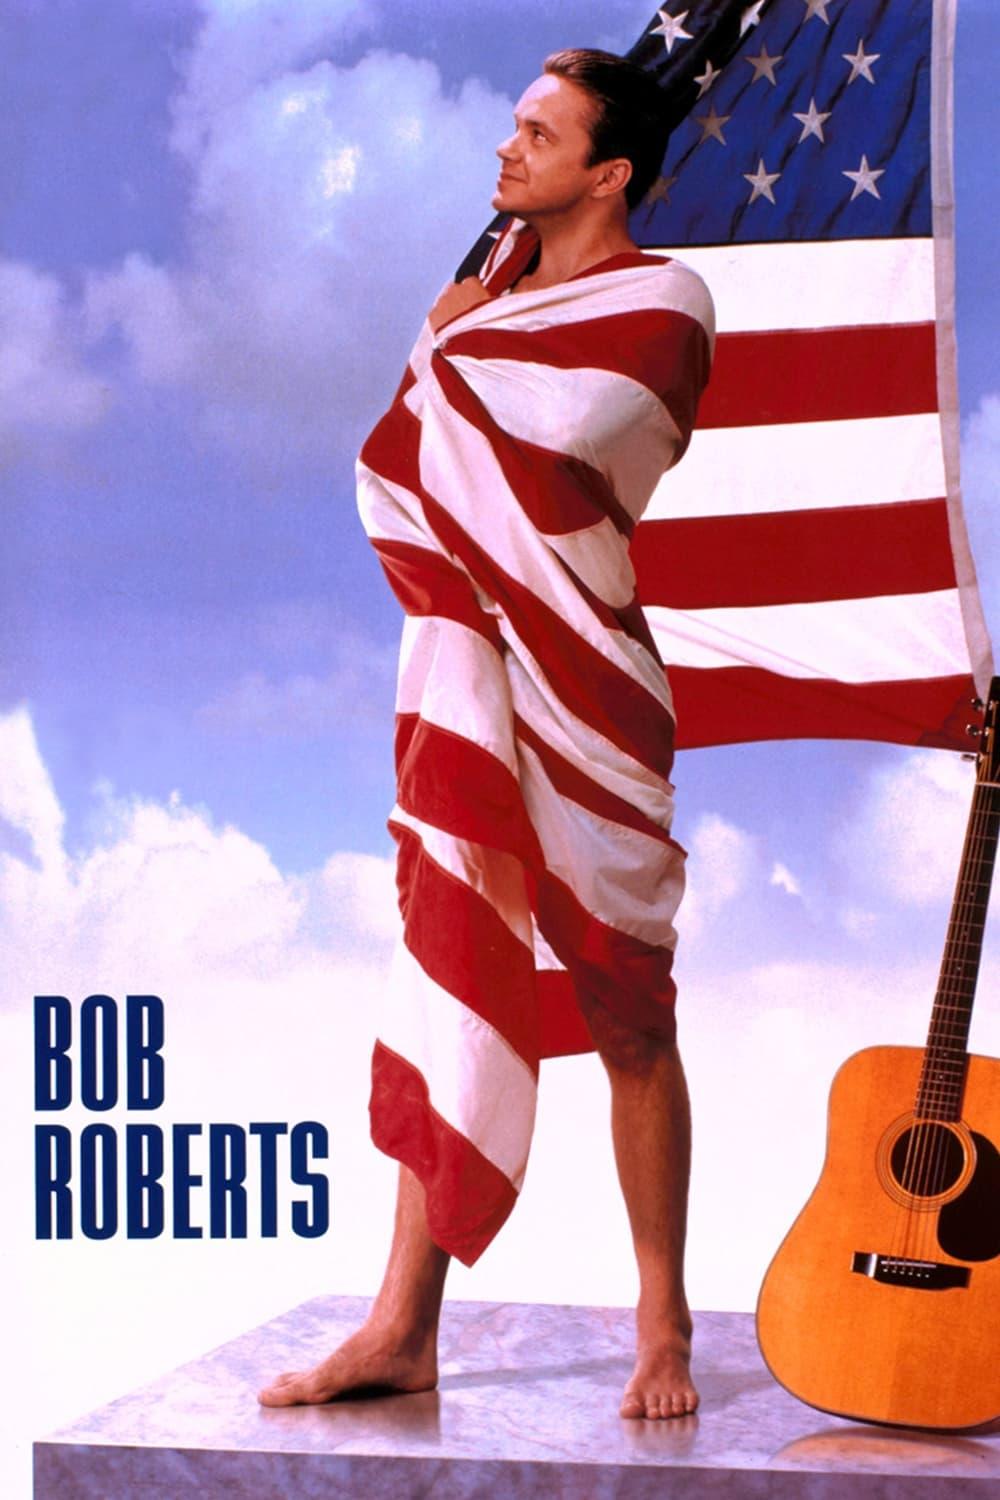 Bob Roberts poster